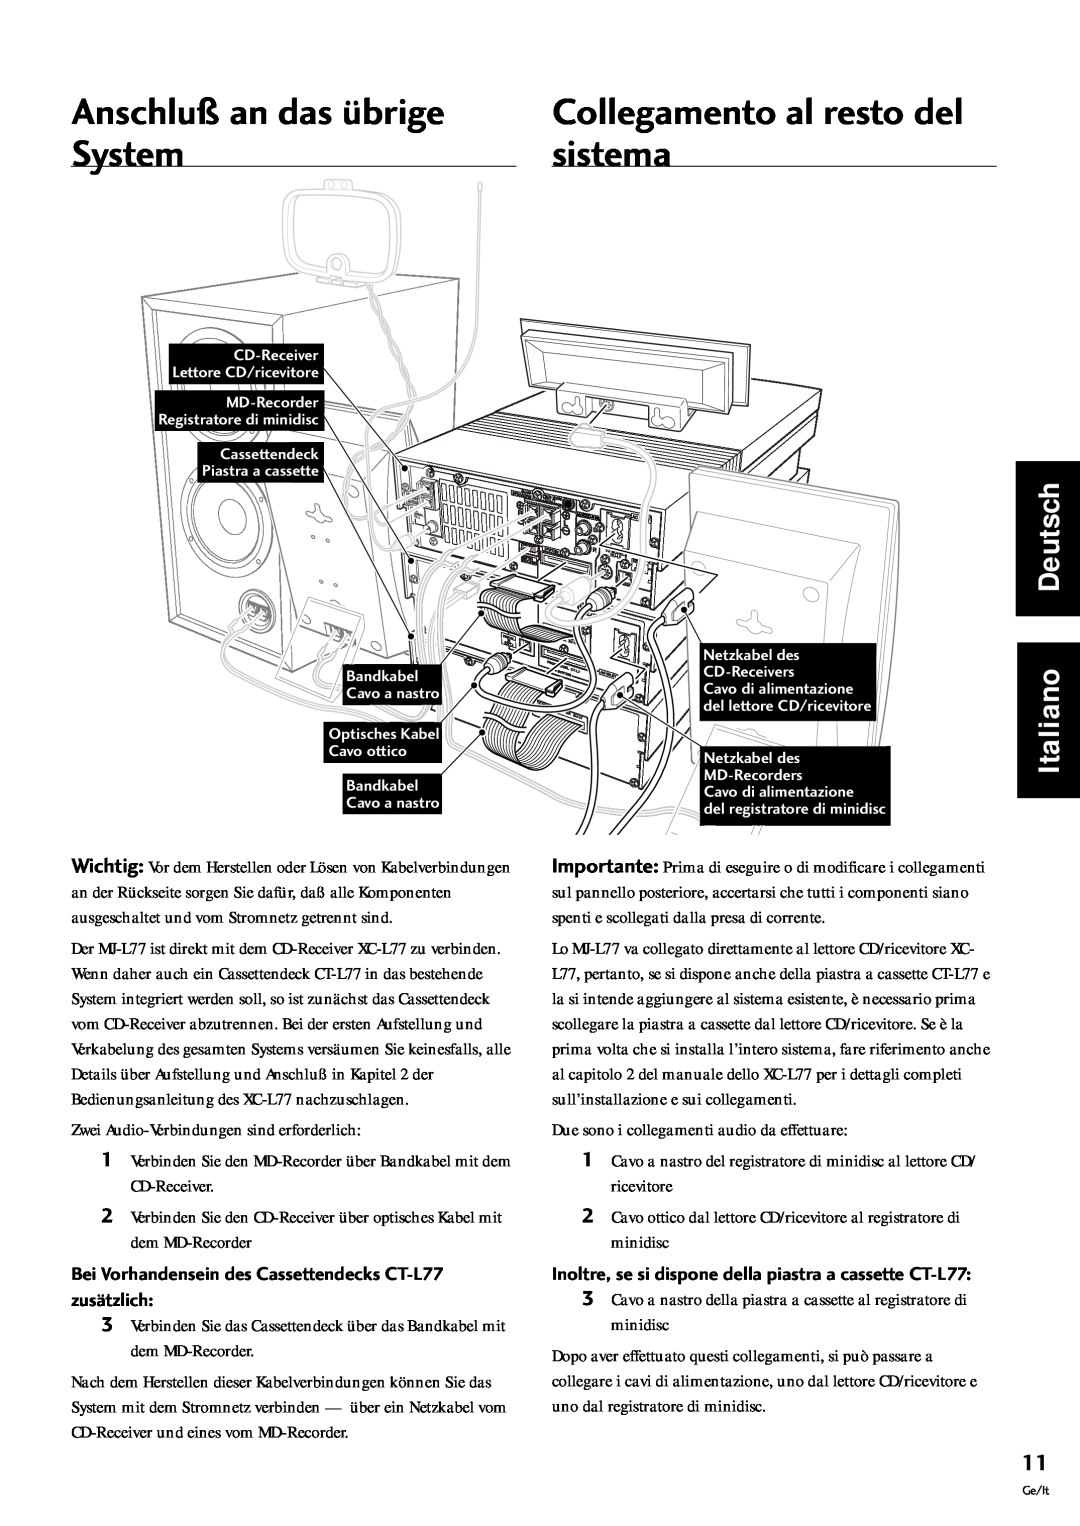 Pioneer MJ-L77 operating instructions Anschlu§ an das Ÿbrige, System, sistema, Collegamento al resto del, Italiano, Deutsch 